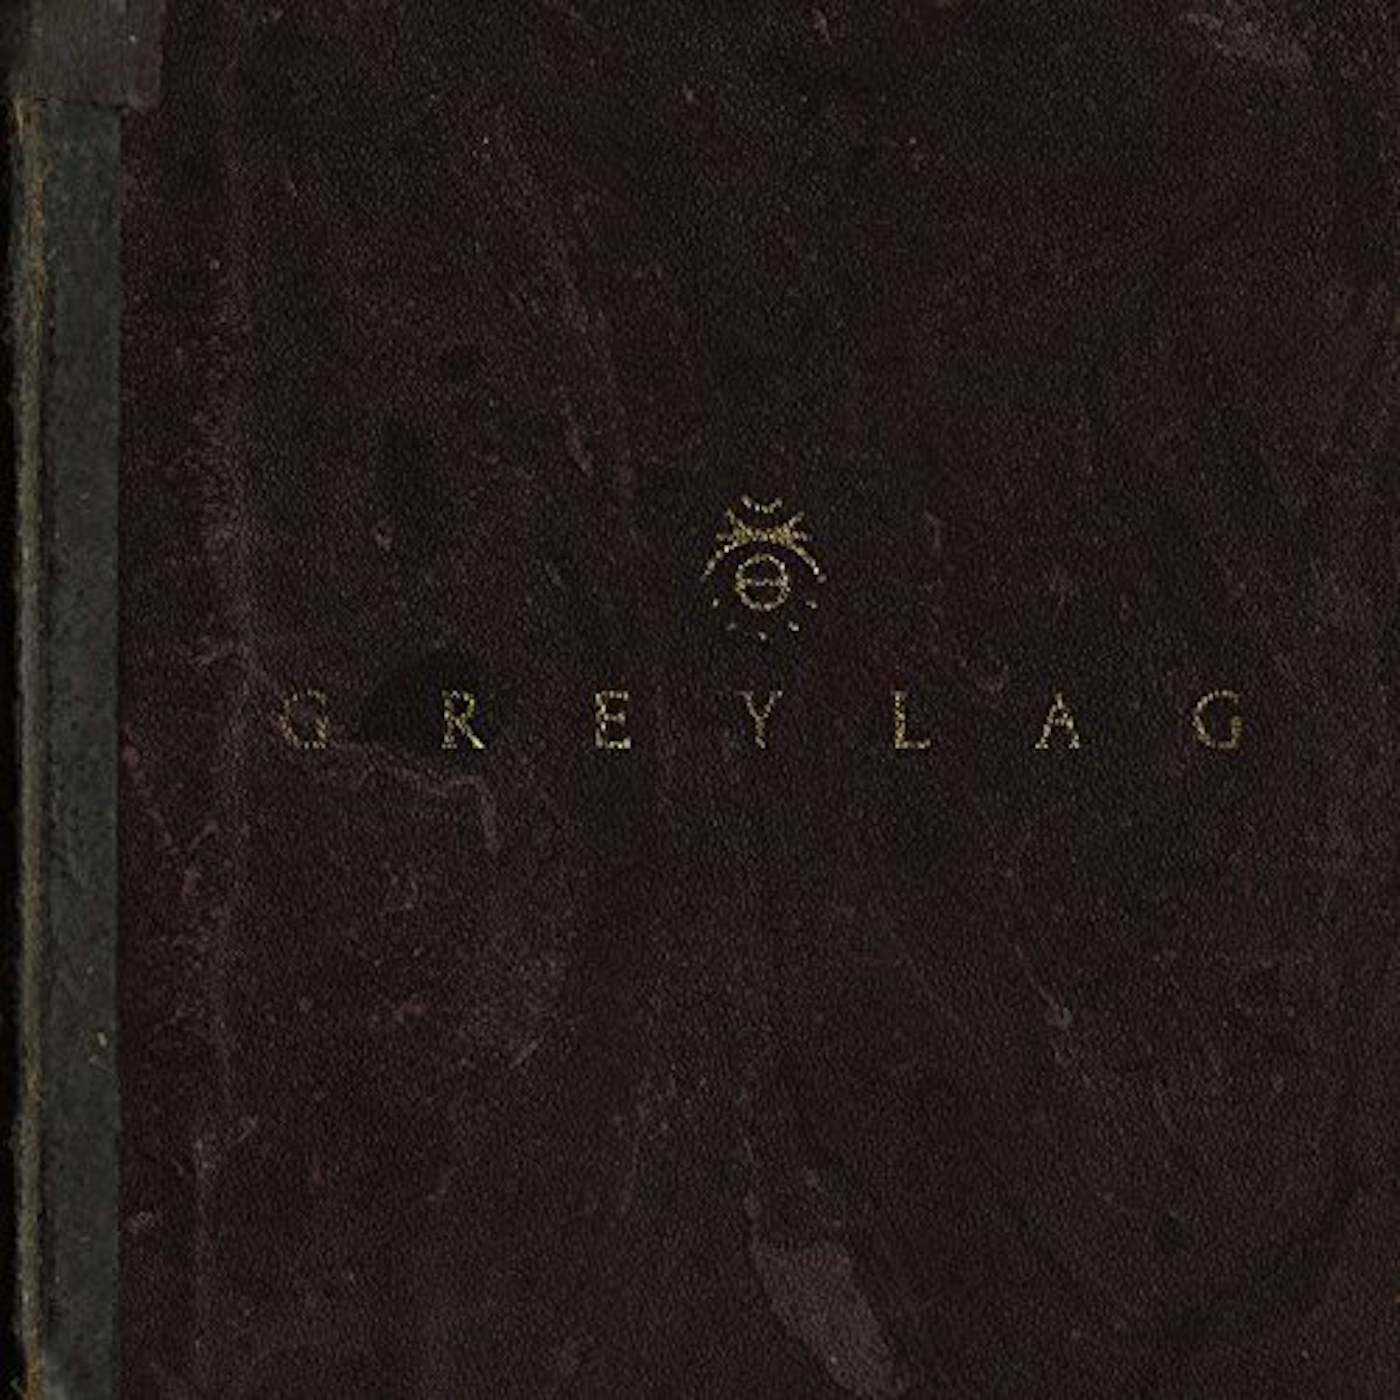 Greylag Vinyl Record